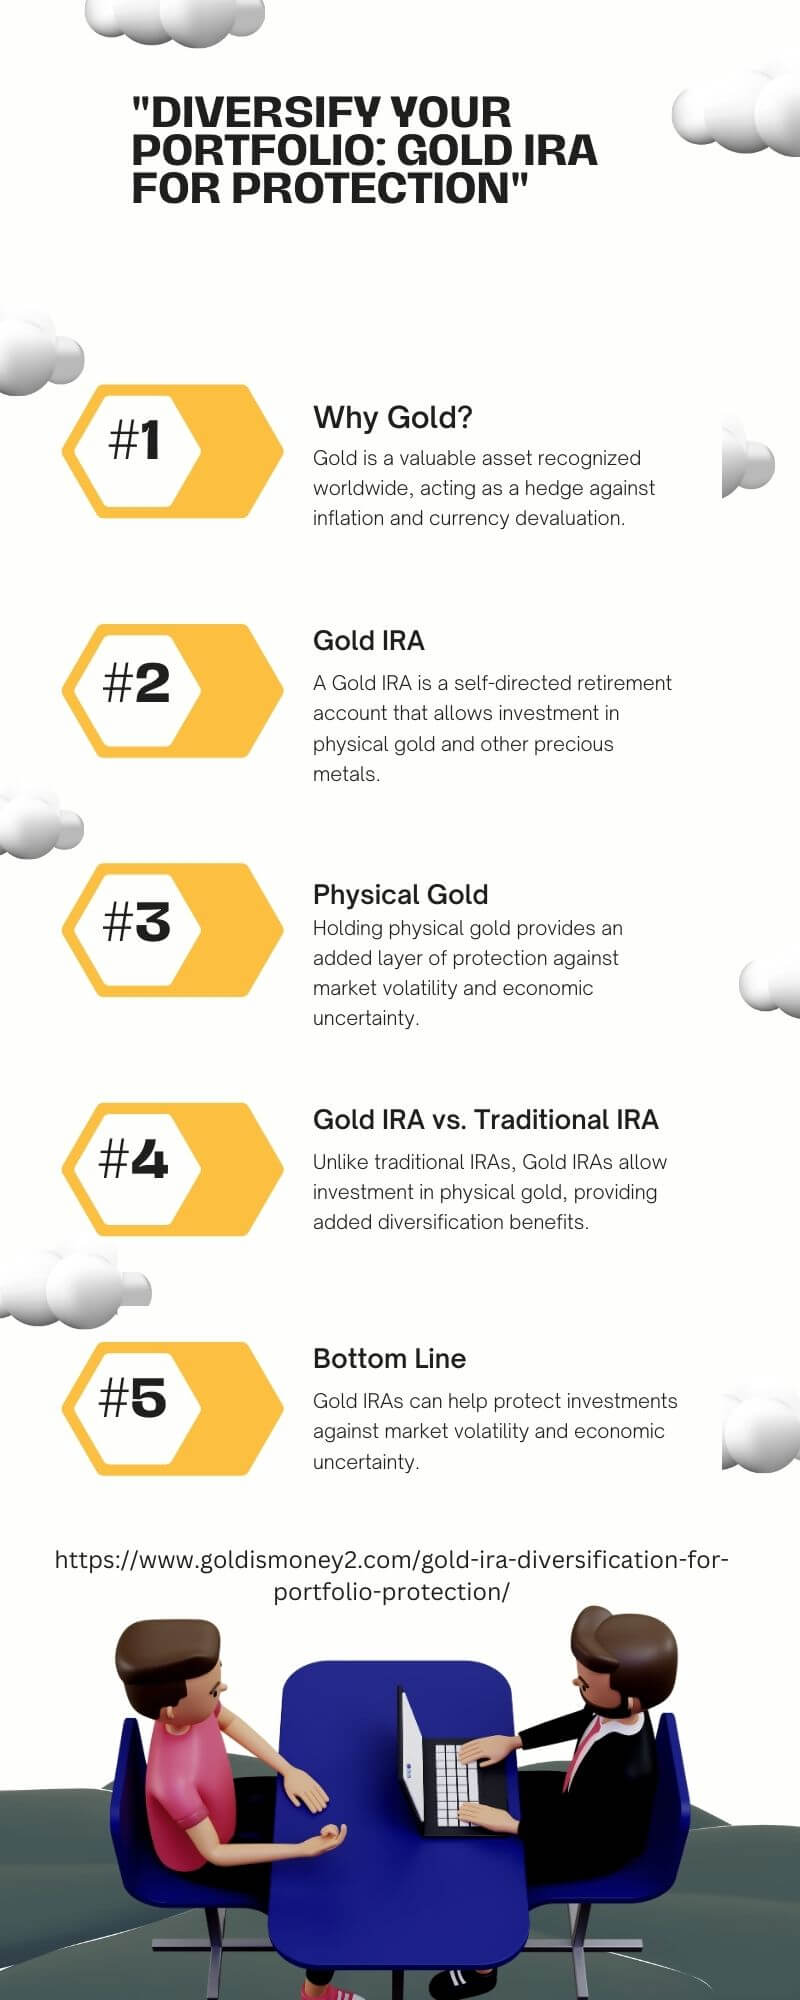 gold ira diversification infographic 5